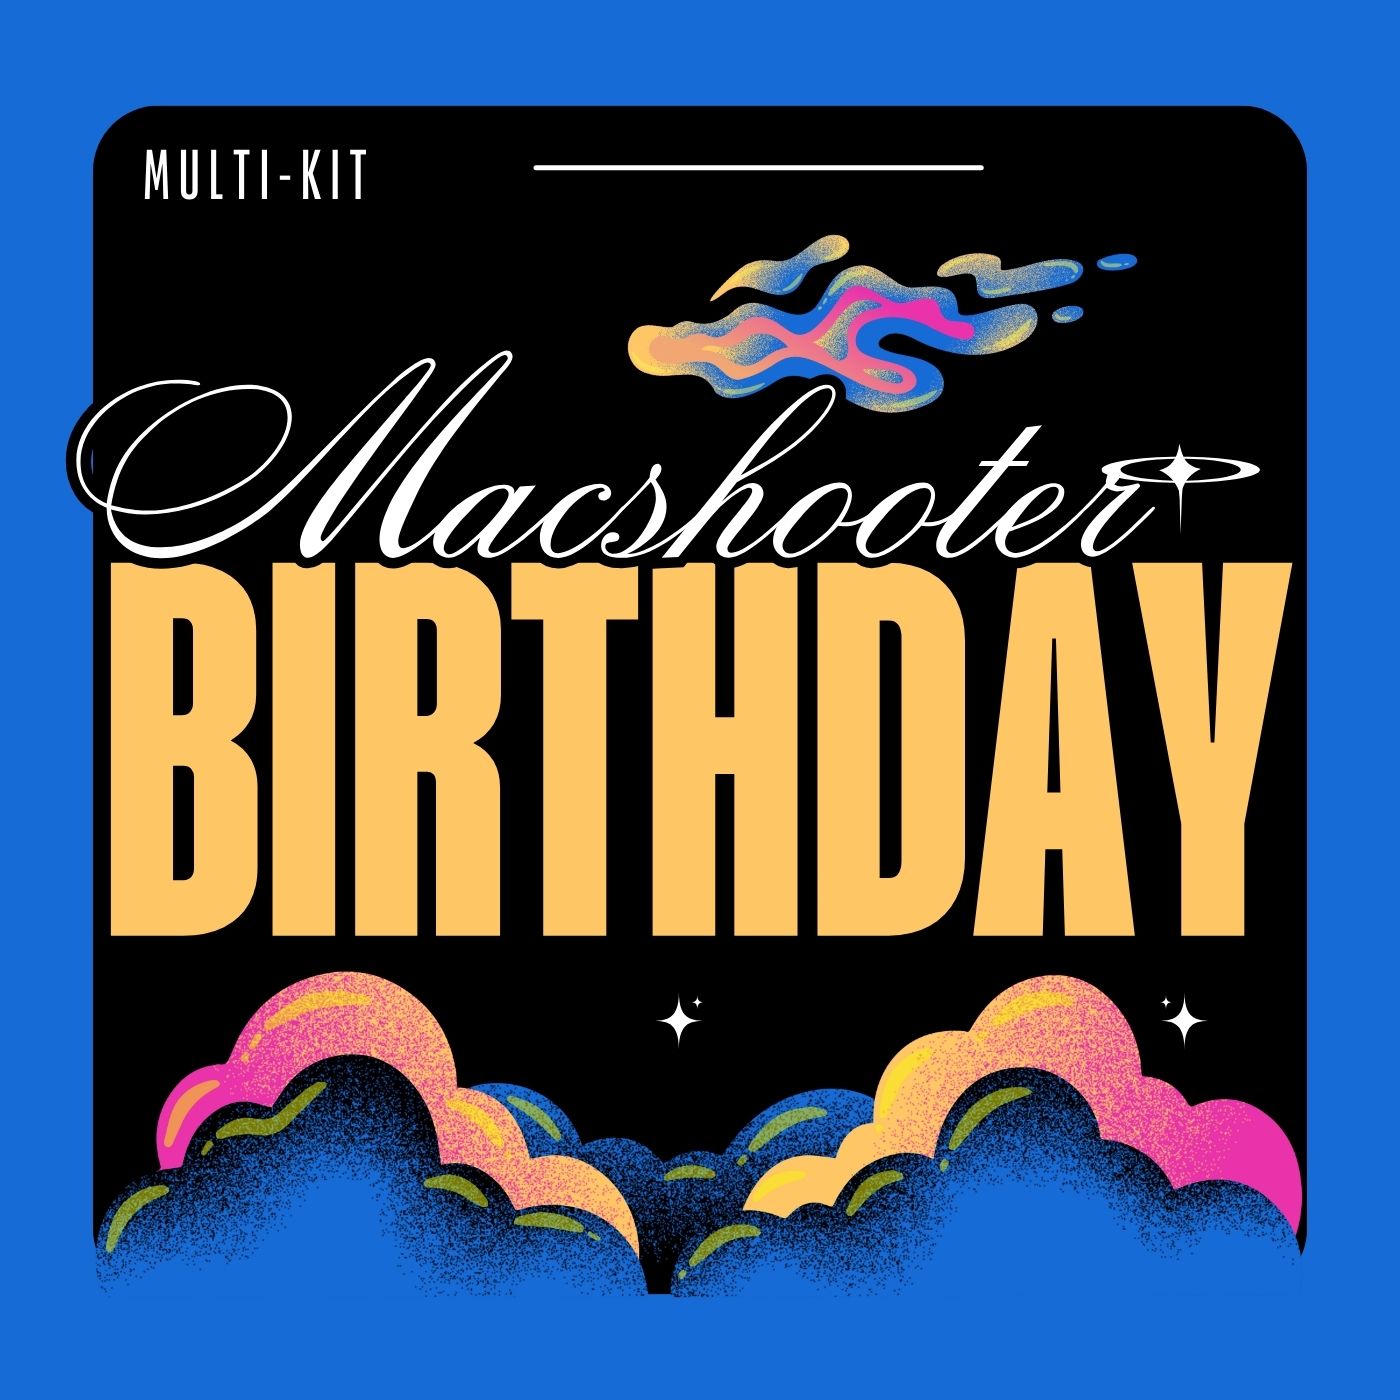 Macshooter's Birthday: Multi-Kit